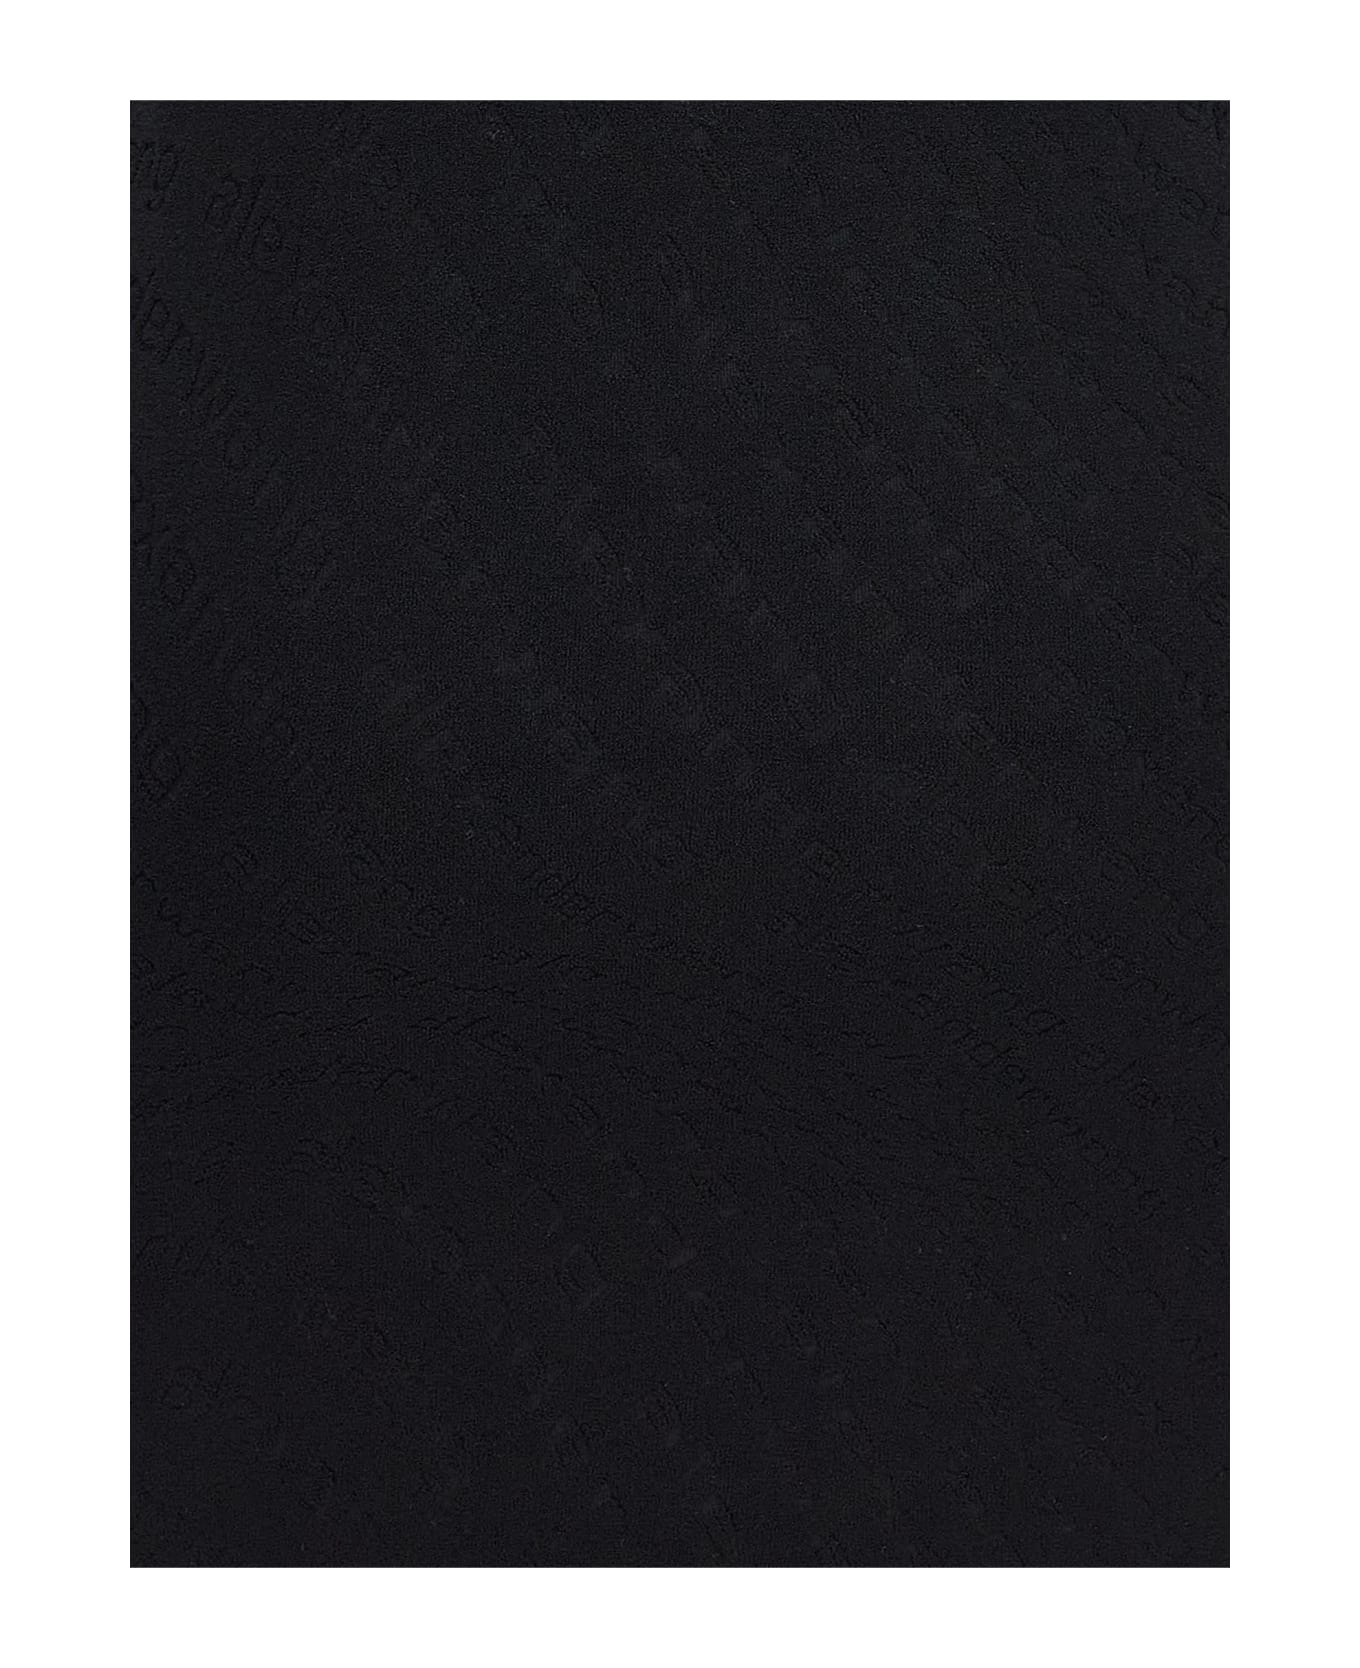 T by Alexander Wang Logo Dress - Black  